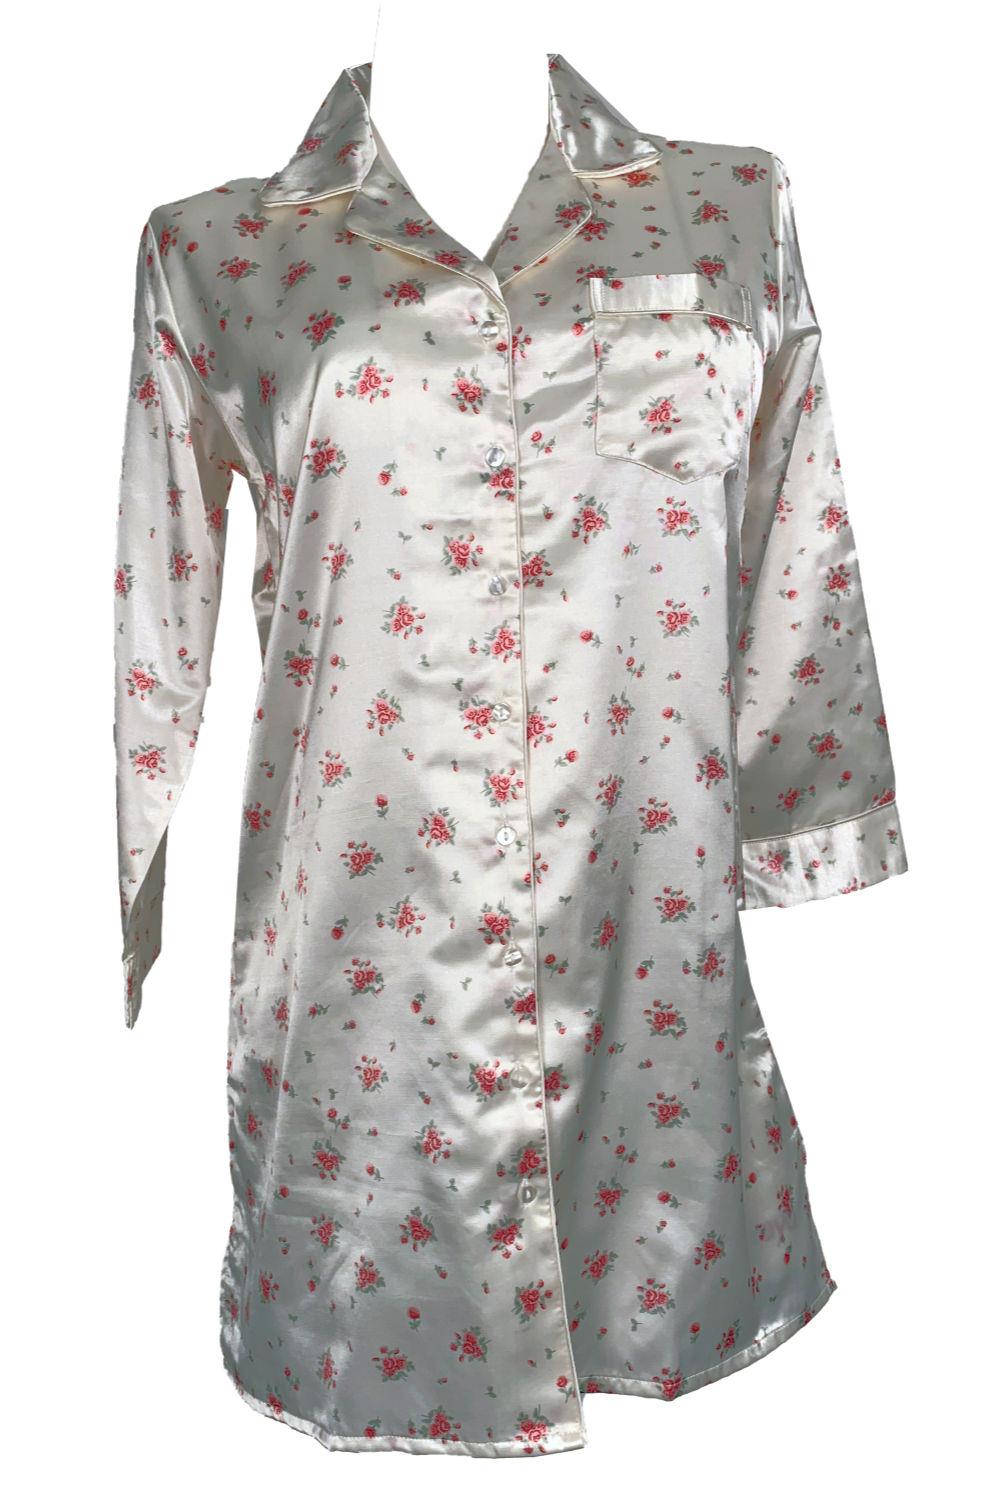 Kayanna Grey Plaid Flannel Nightgown